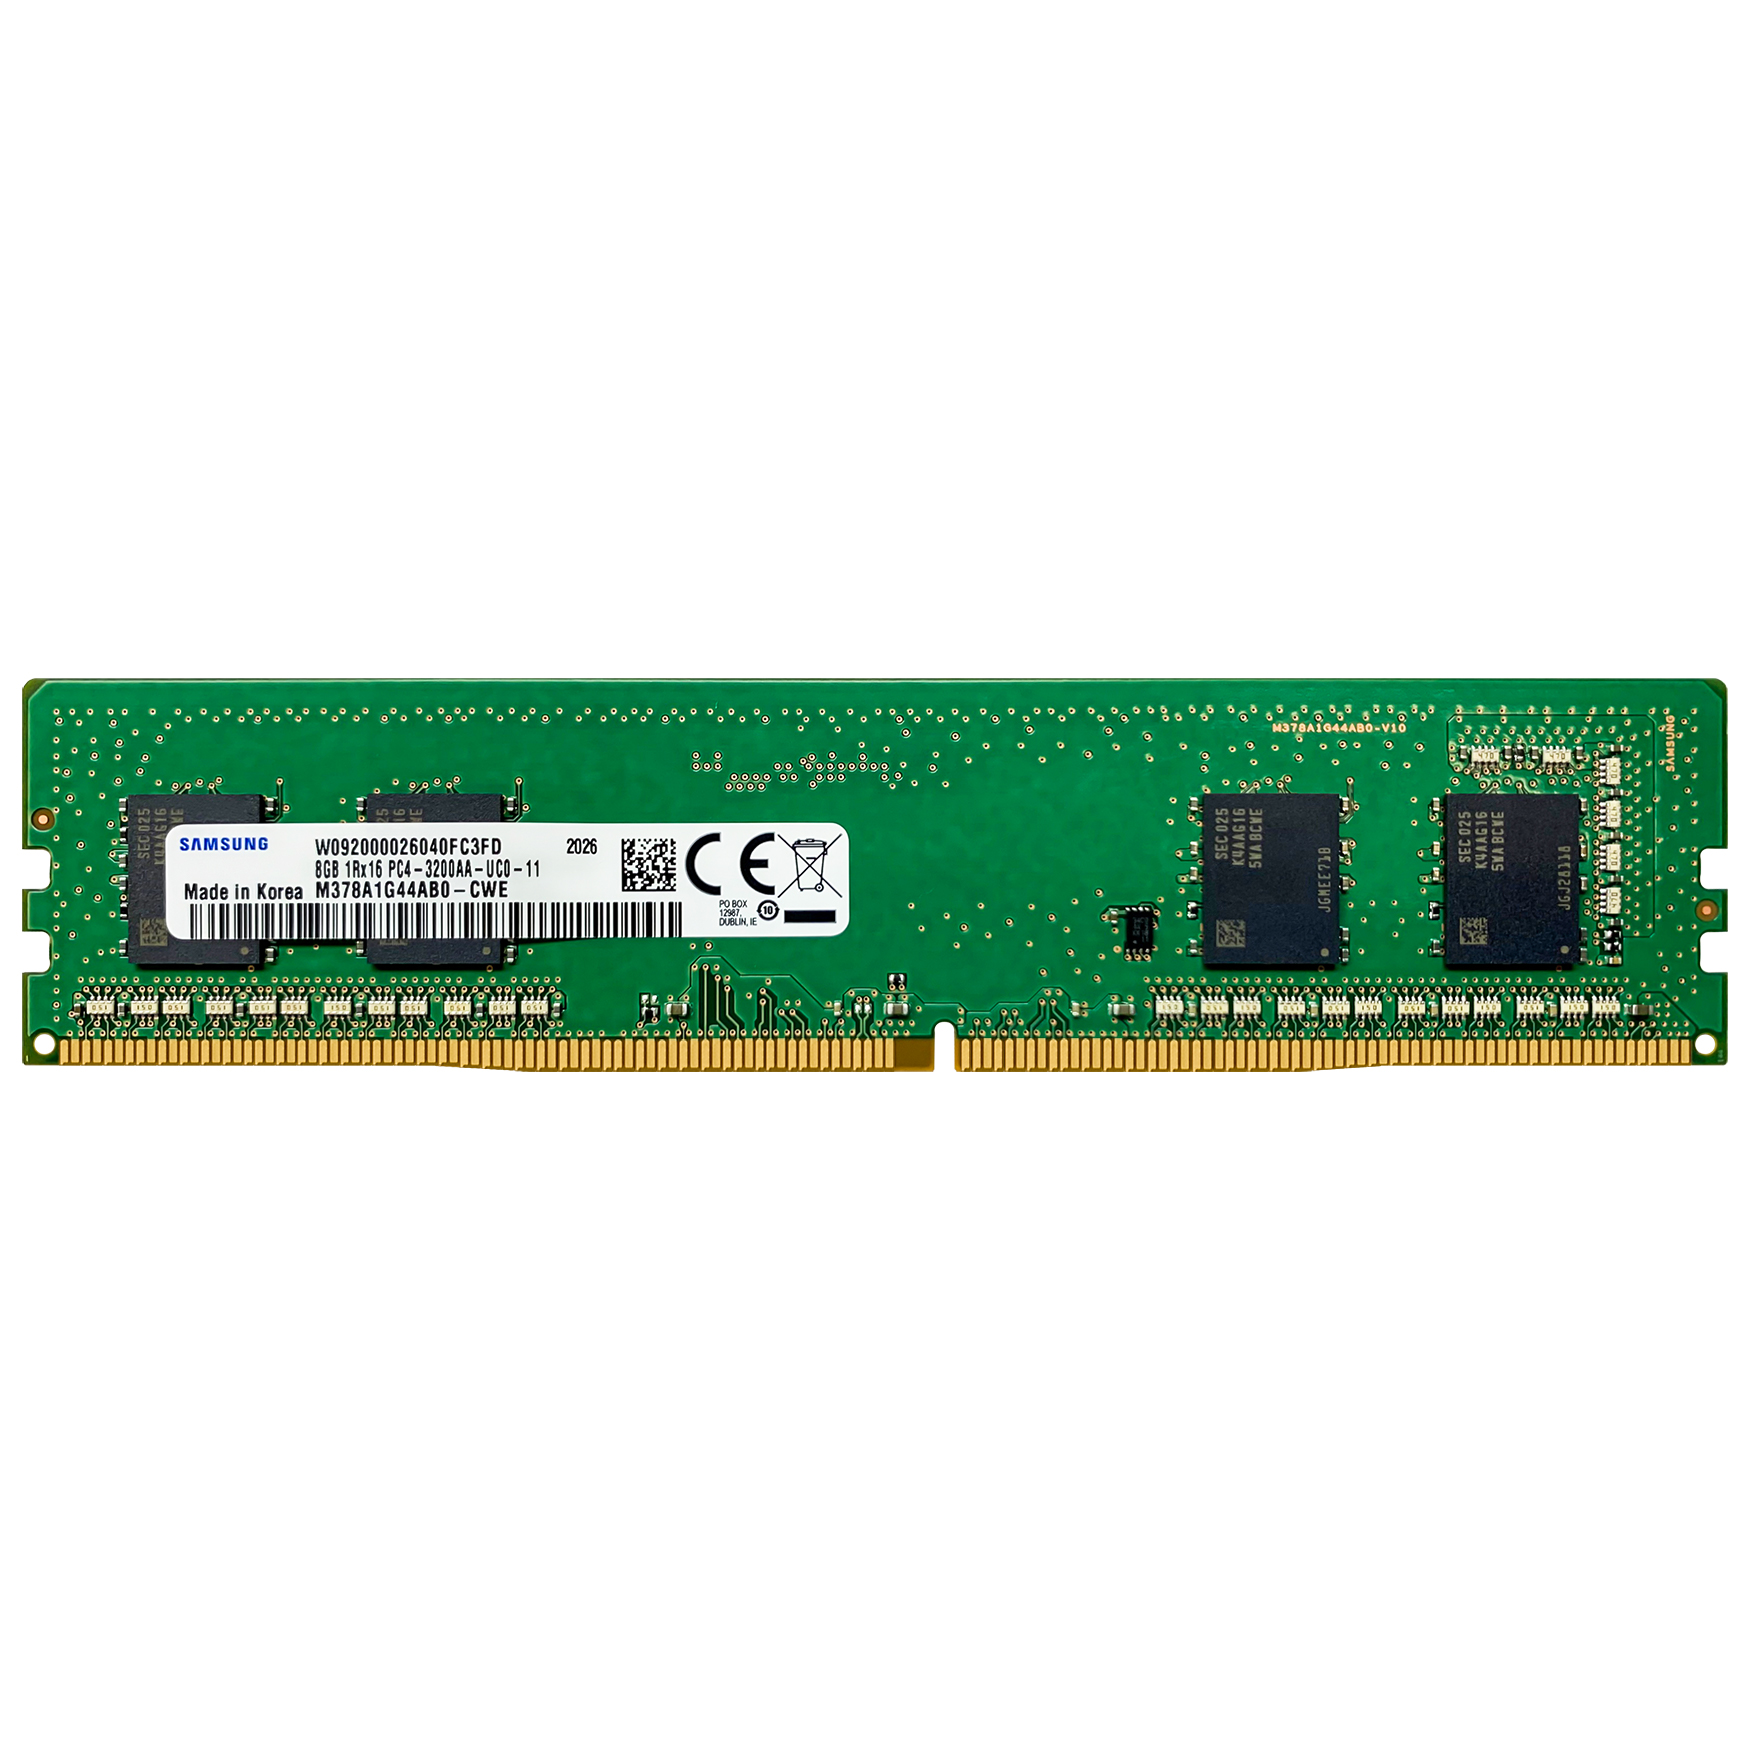 Samsung 8GB DDR4 3200 MHz PC4-25600 DIMM Desktop Memory RAM